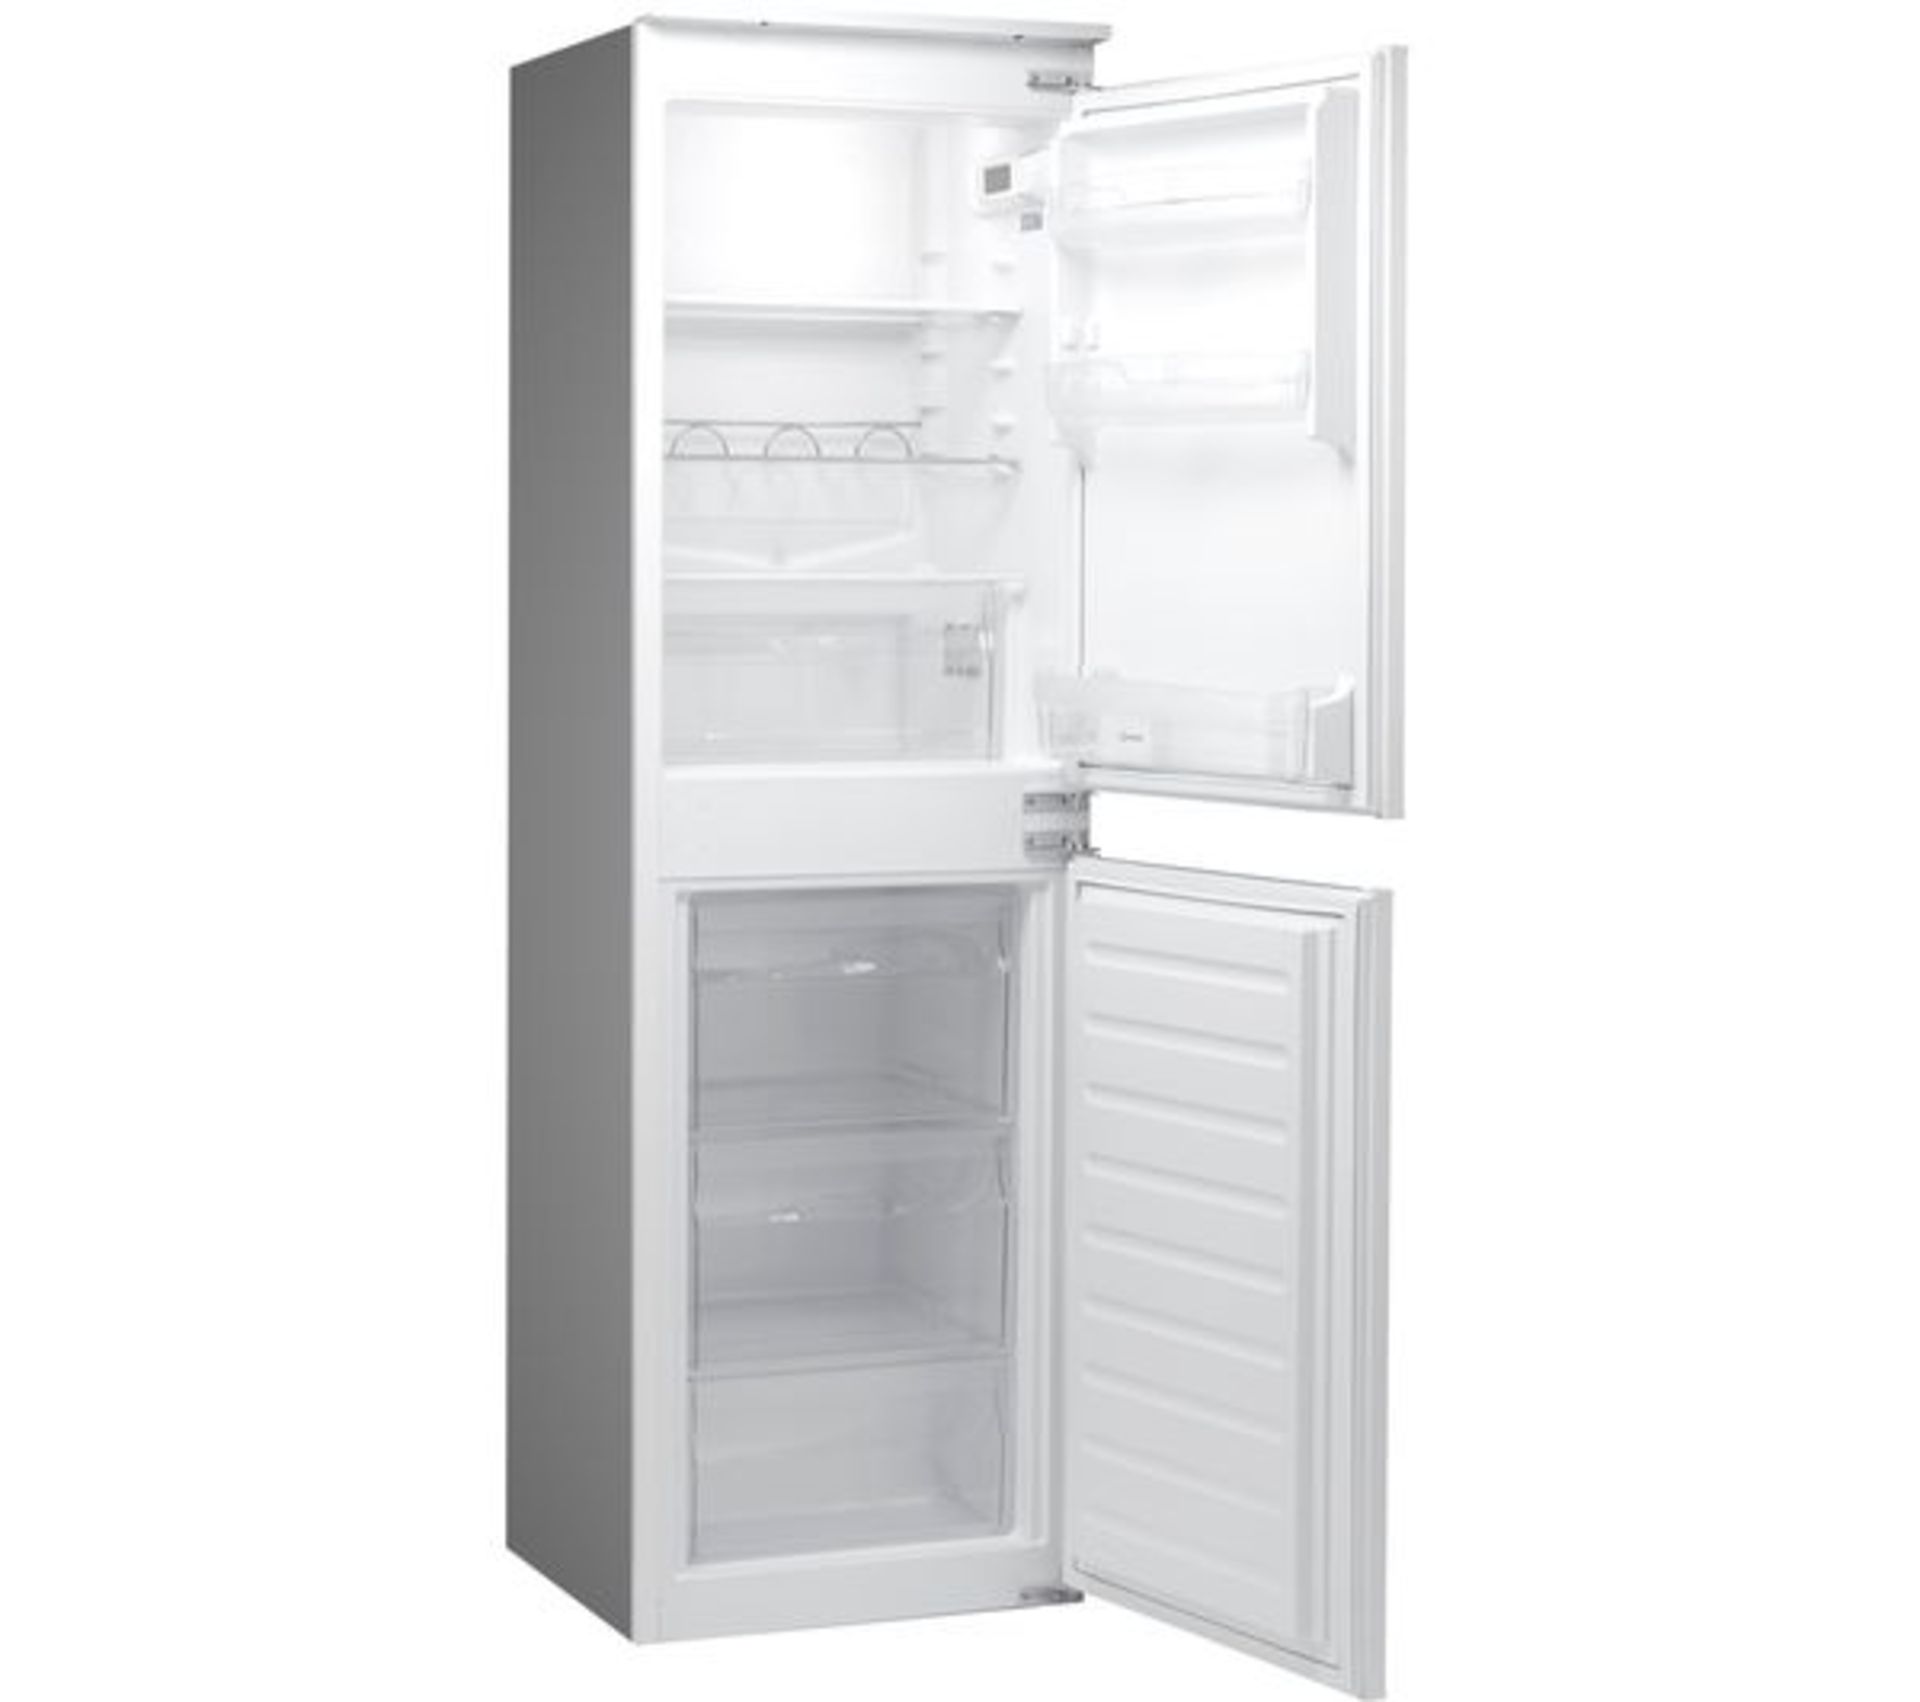 (KA48) Indesit IB5050A1D.1 Integrated 50/50 Fridge Freezer with Sliding Door Fixing Kit - White...